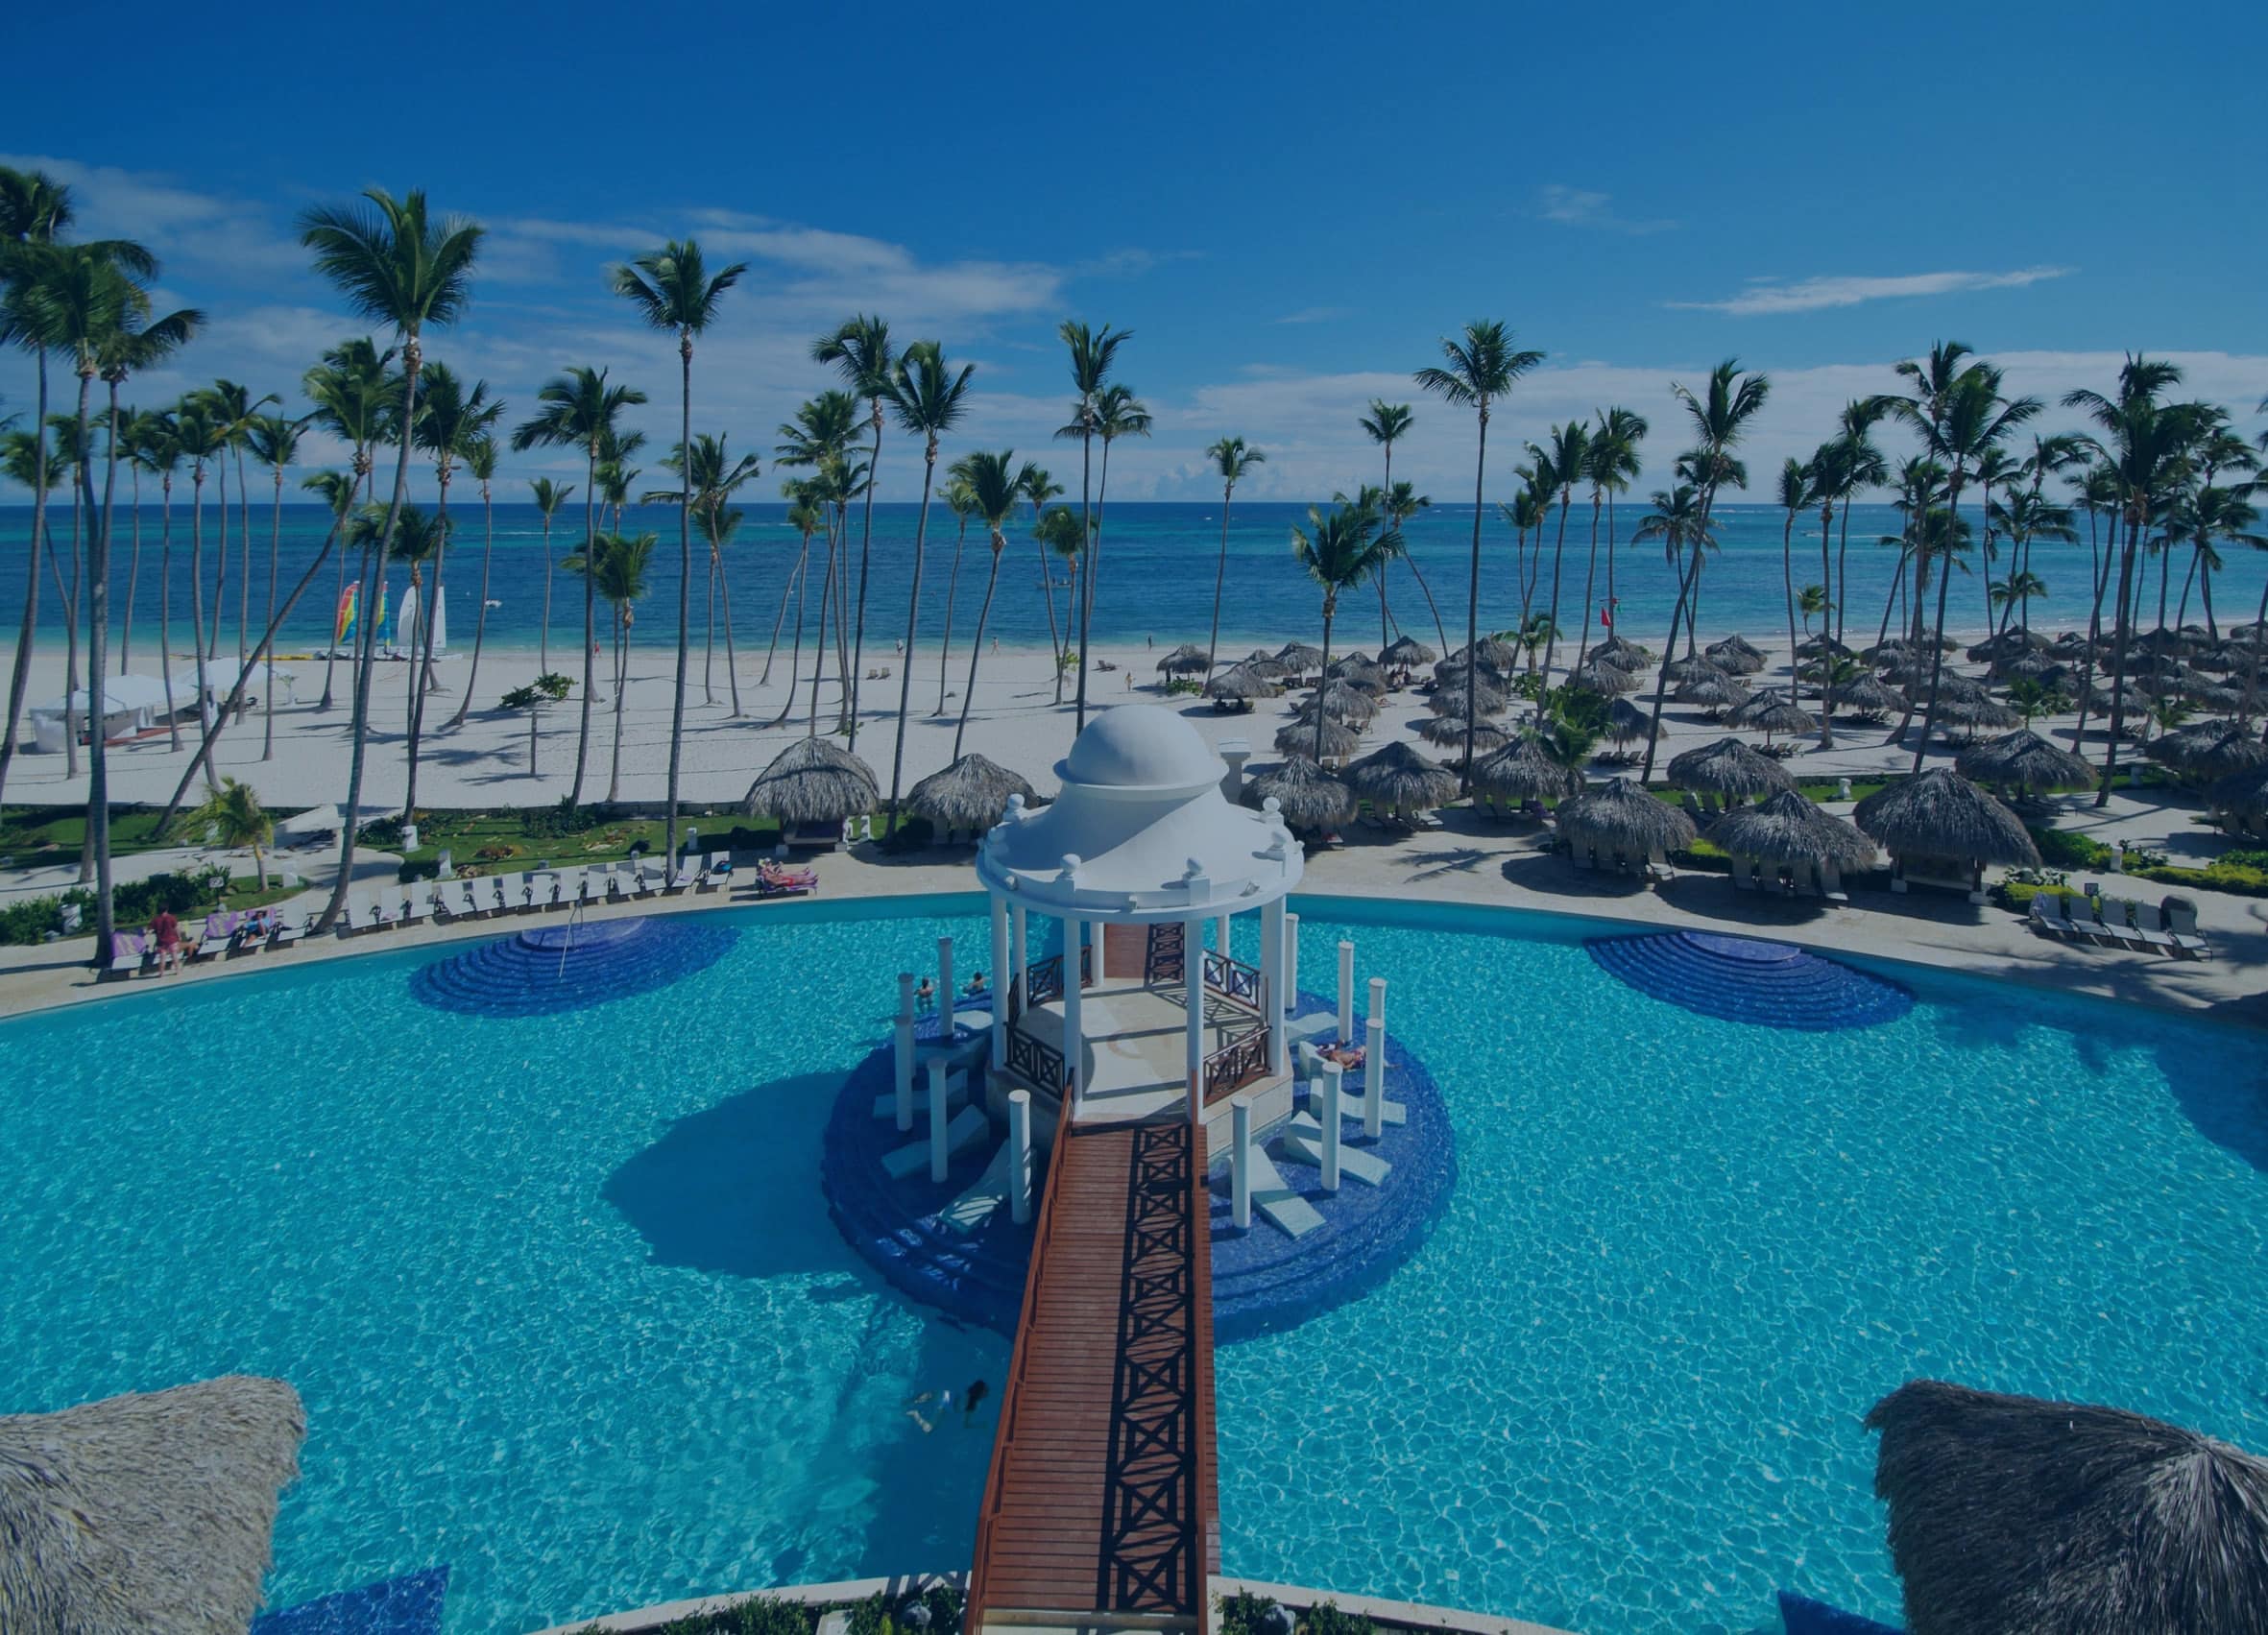 Best AllInclusive Hotels in the Dominican Republic